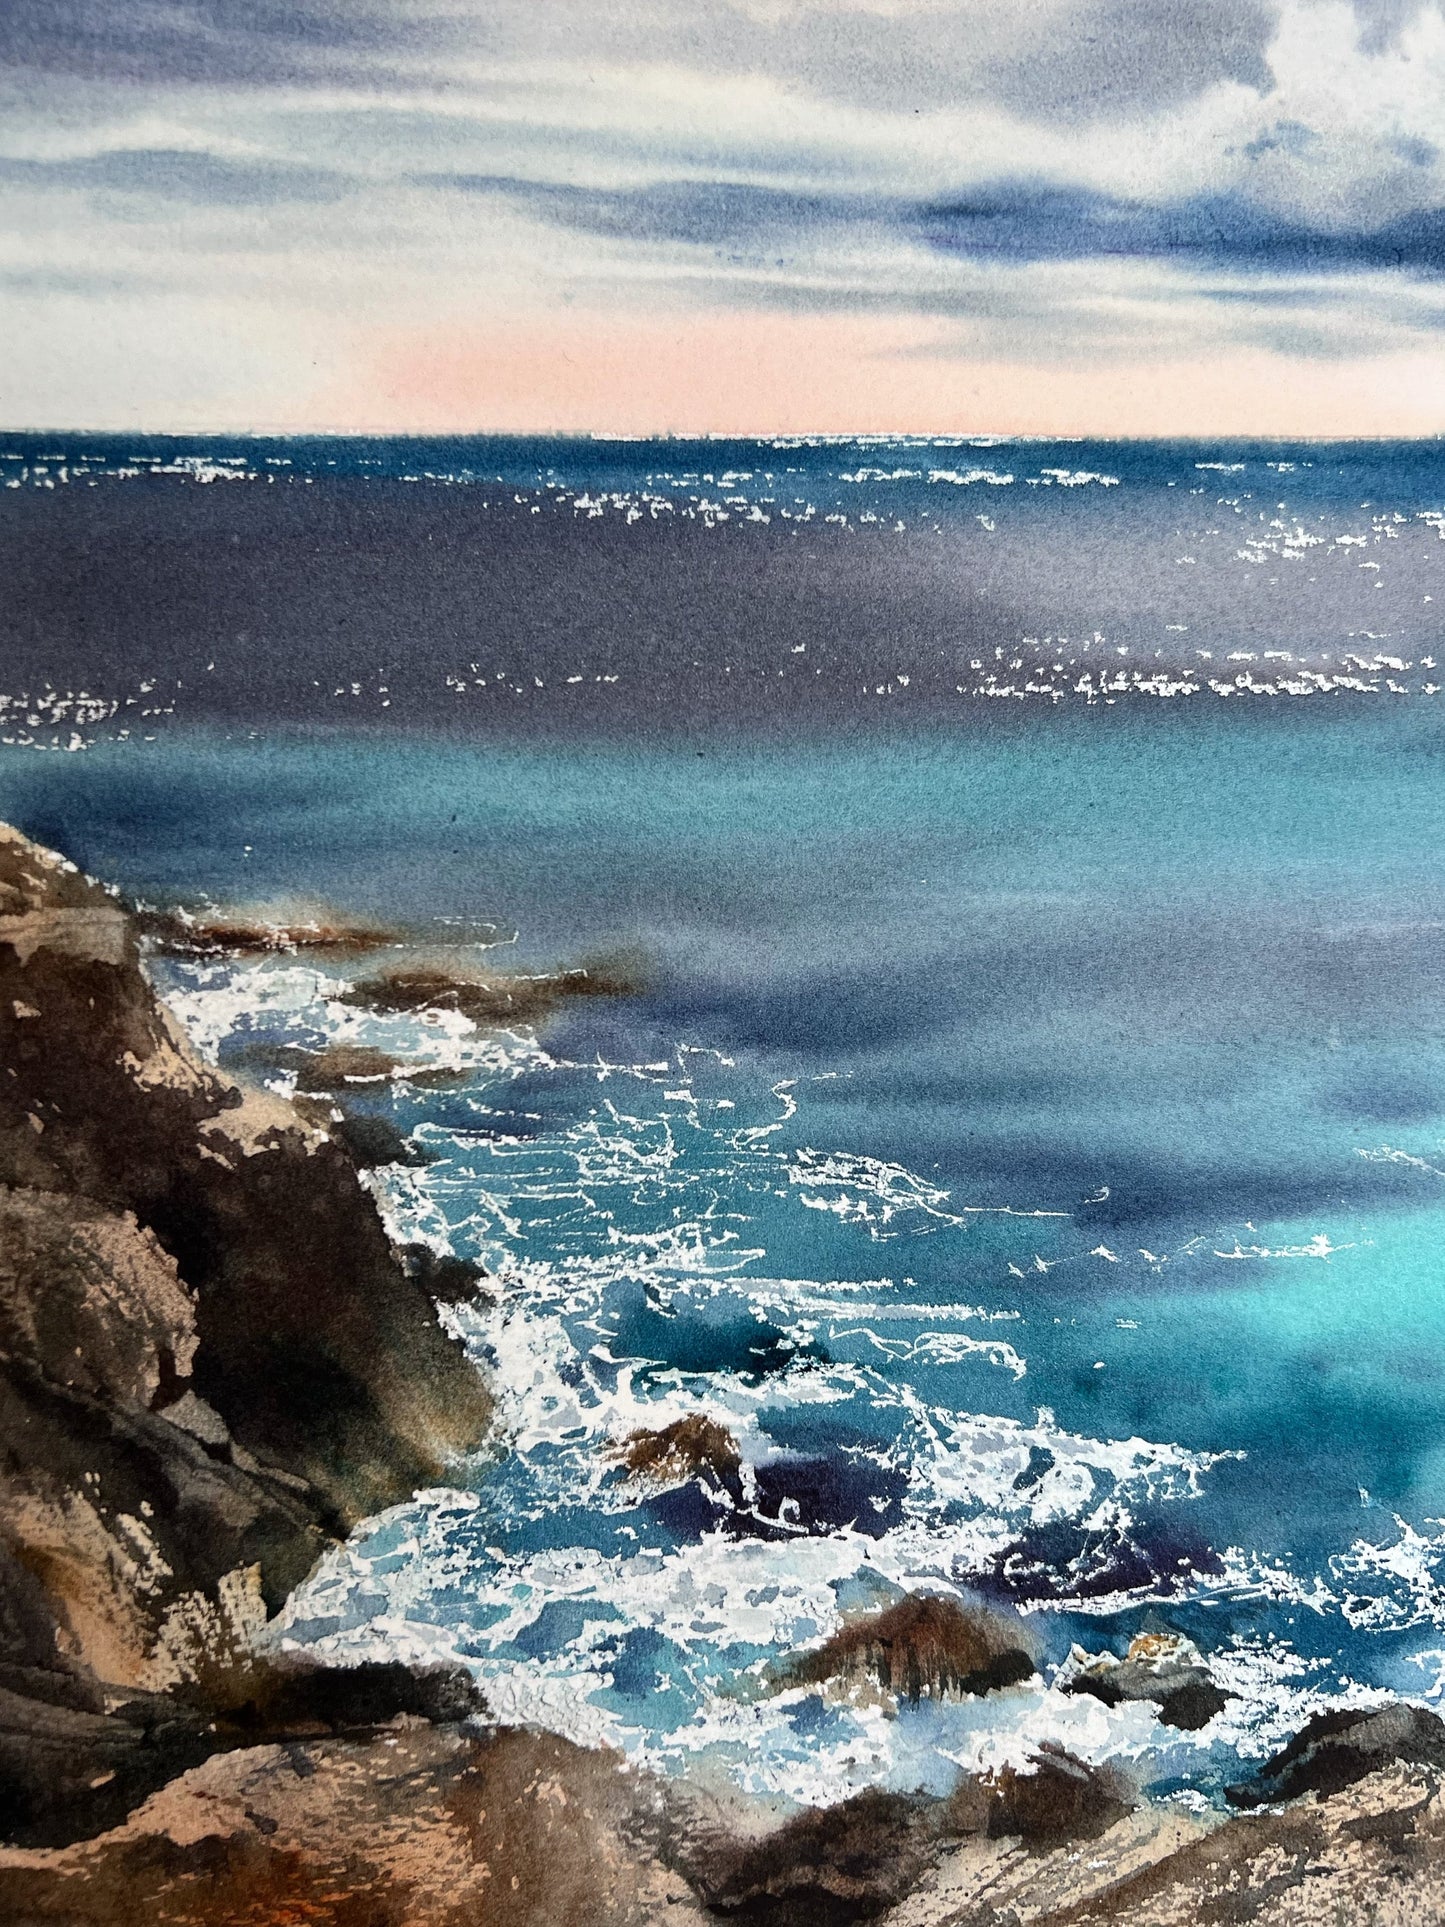 Sea Stones Painting, Original Watercolor Artwork, Sea Wave Art, Seascape, Coast, Hand-painted Ocean Home Wall Decor